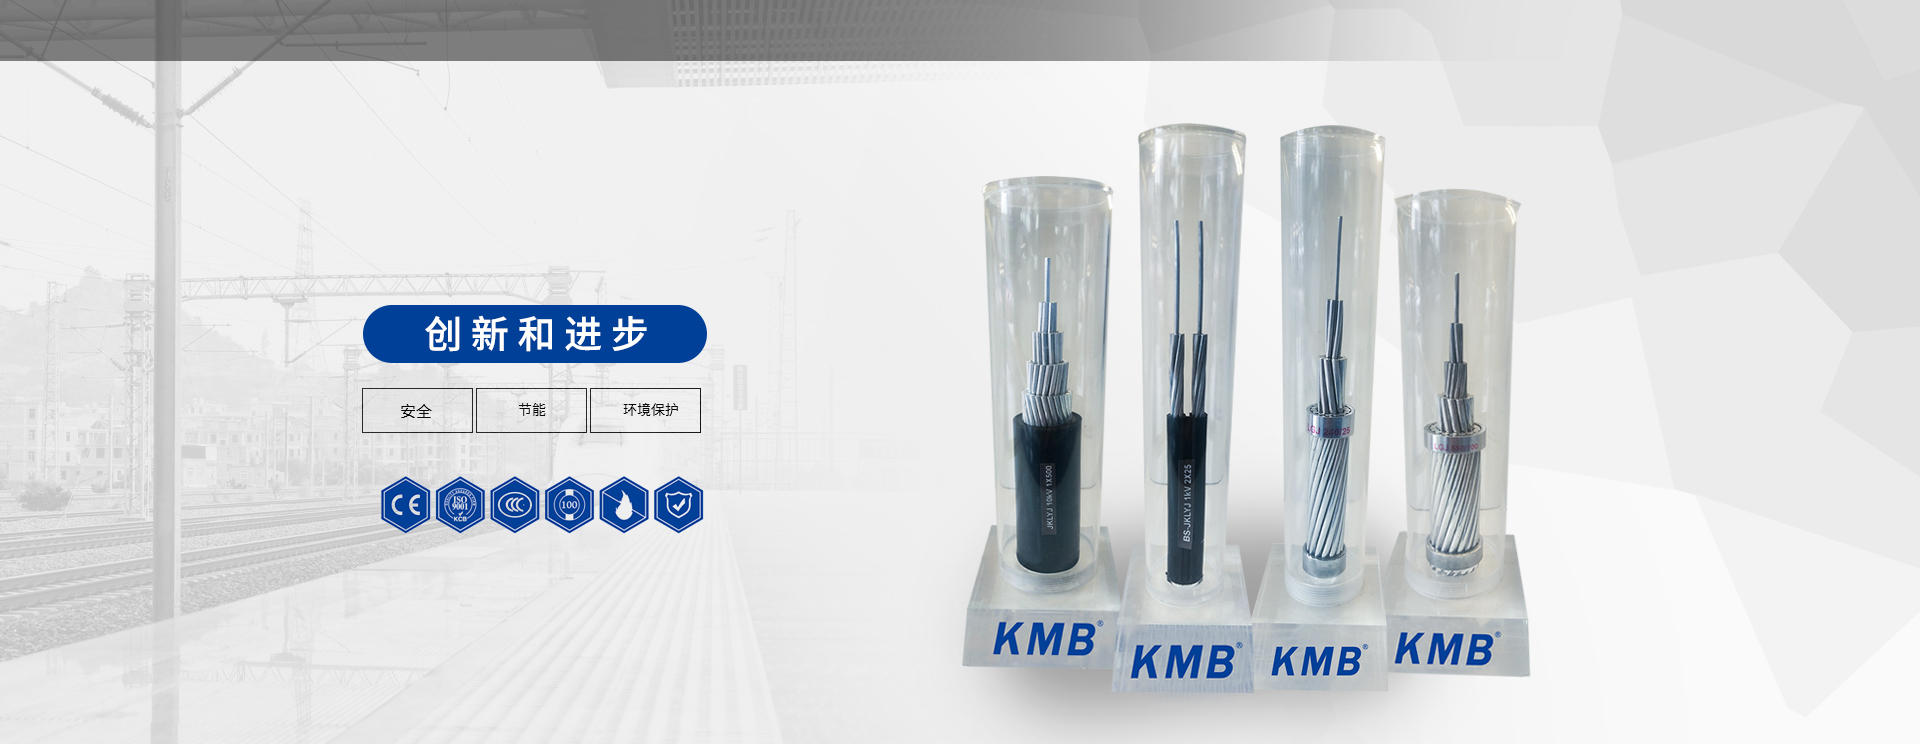 KMB-电线电缆-江西江鸿线缆制造有限公司